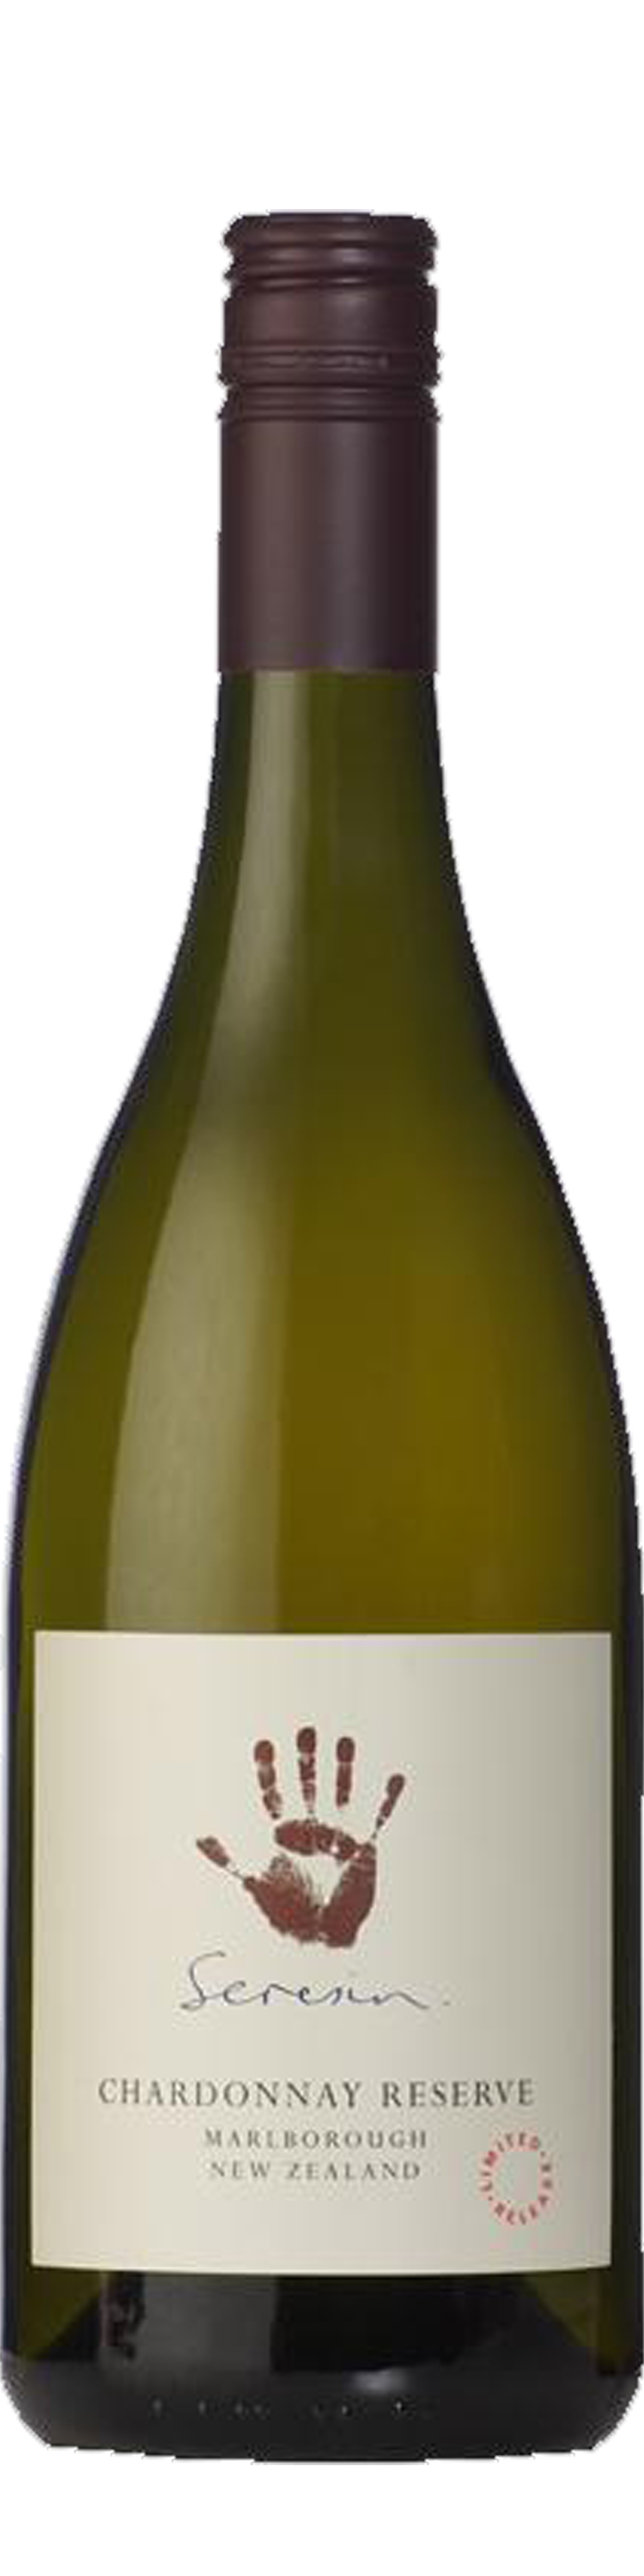 Bottle shot of 2012 Reserve Chardonnay